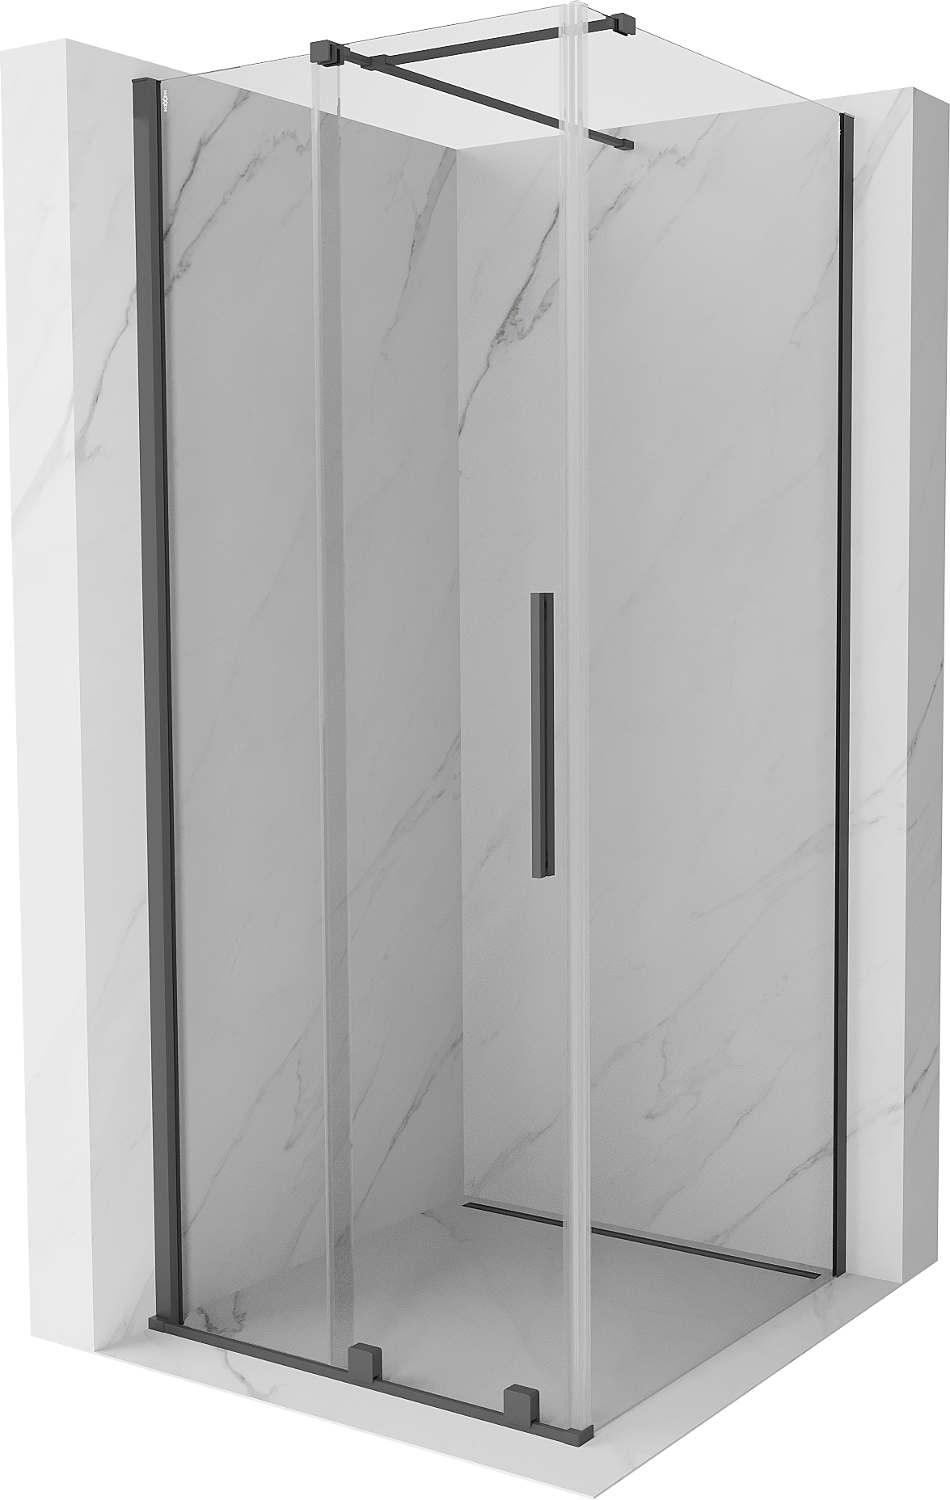 Mexen Velar kabina prysznicowa rozsuwana 110 x 110 cm, transparent, gun gray szczotkowany - 871-110-110-01-66